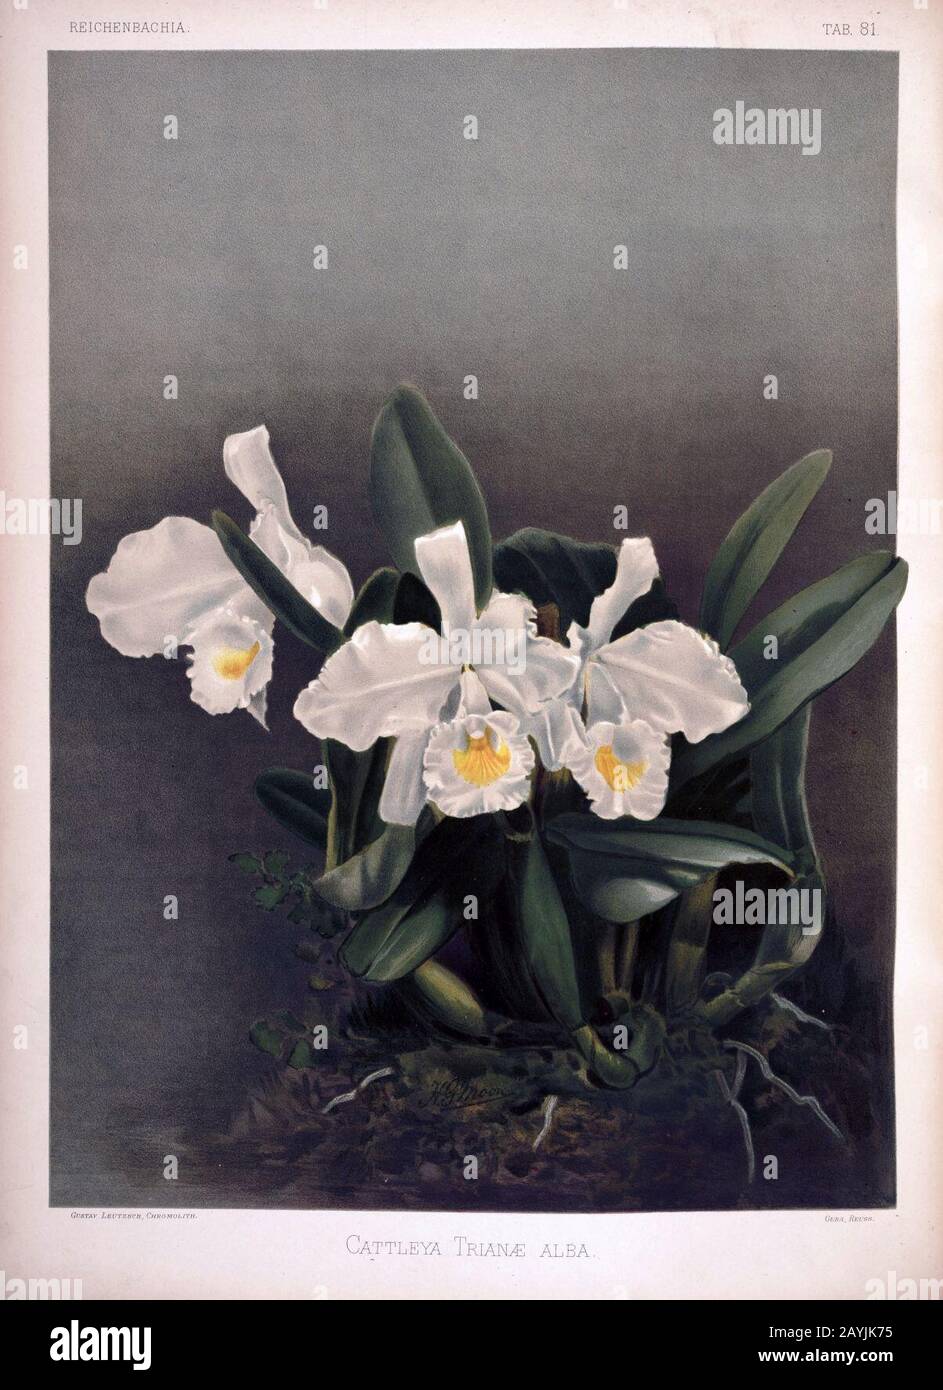 Frederick Sander - Reichenbachia II plate 81 (1890) - Cattleya trianae alba. Stock Photo